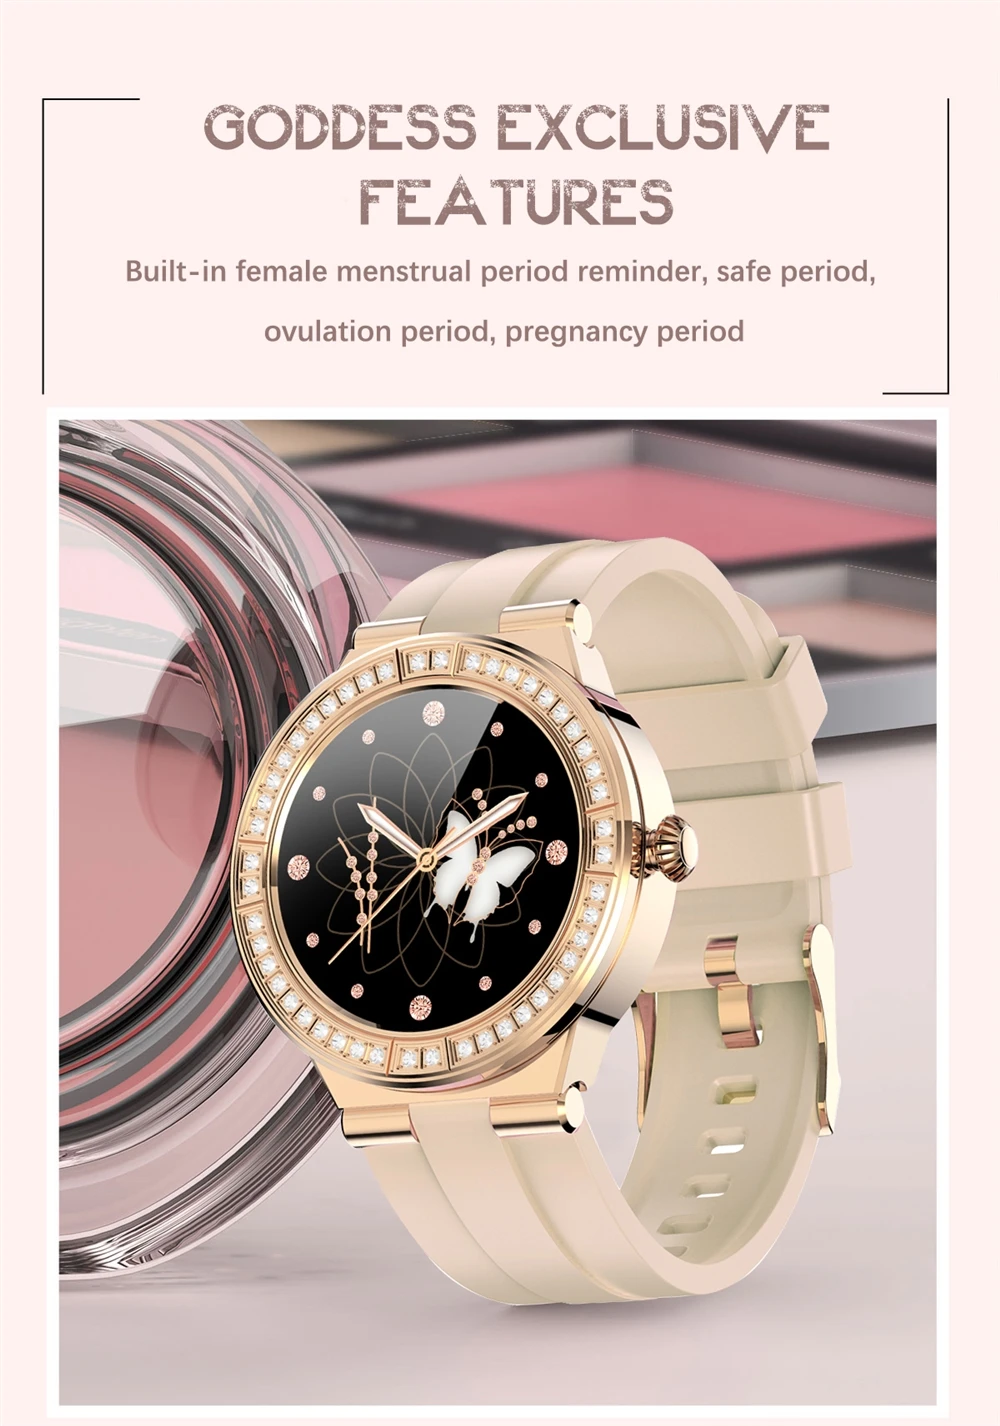 Wholesale LIGE BW0323 beautiful gold female smartwatch nice